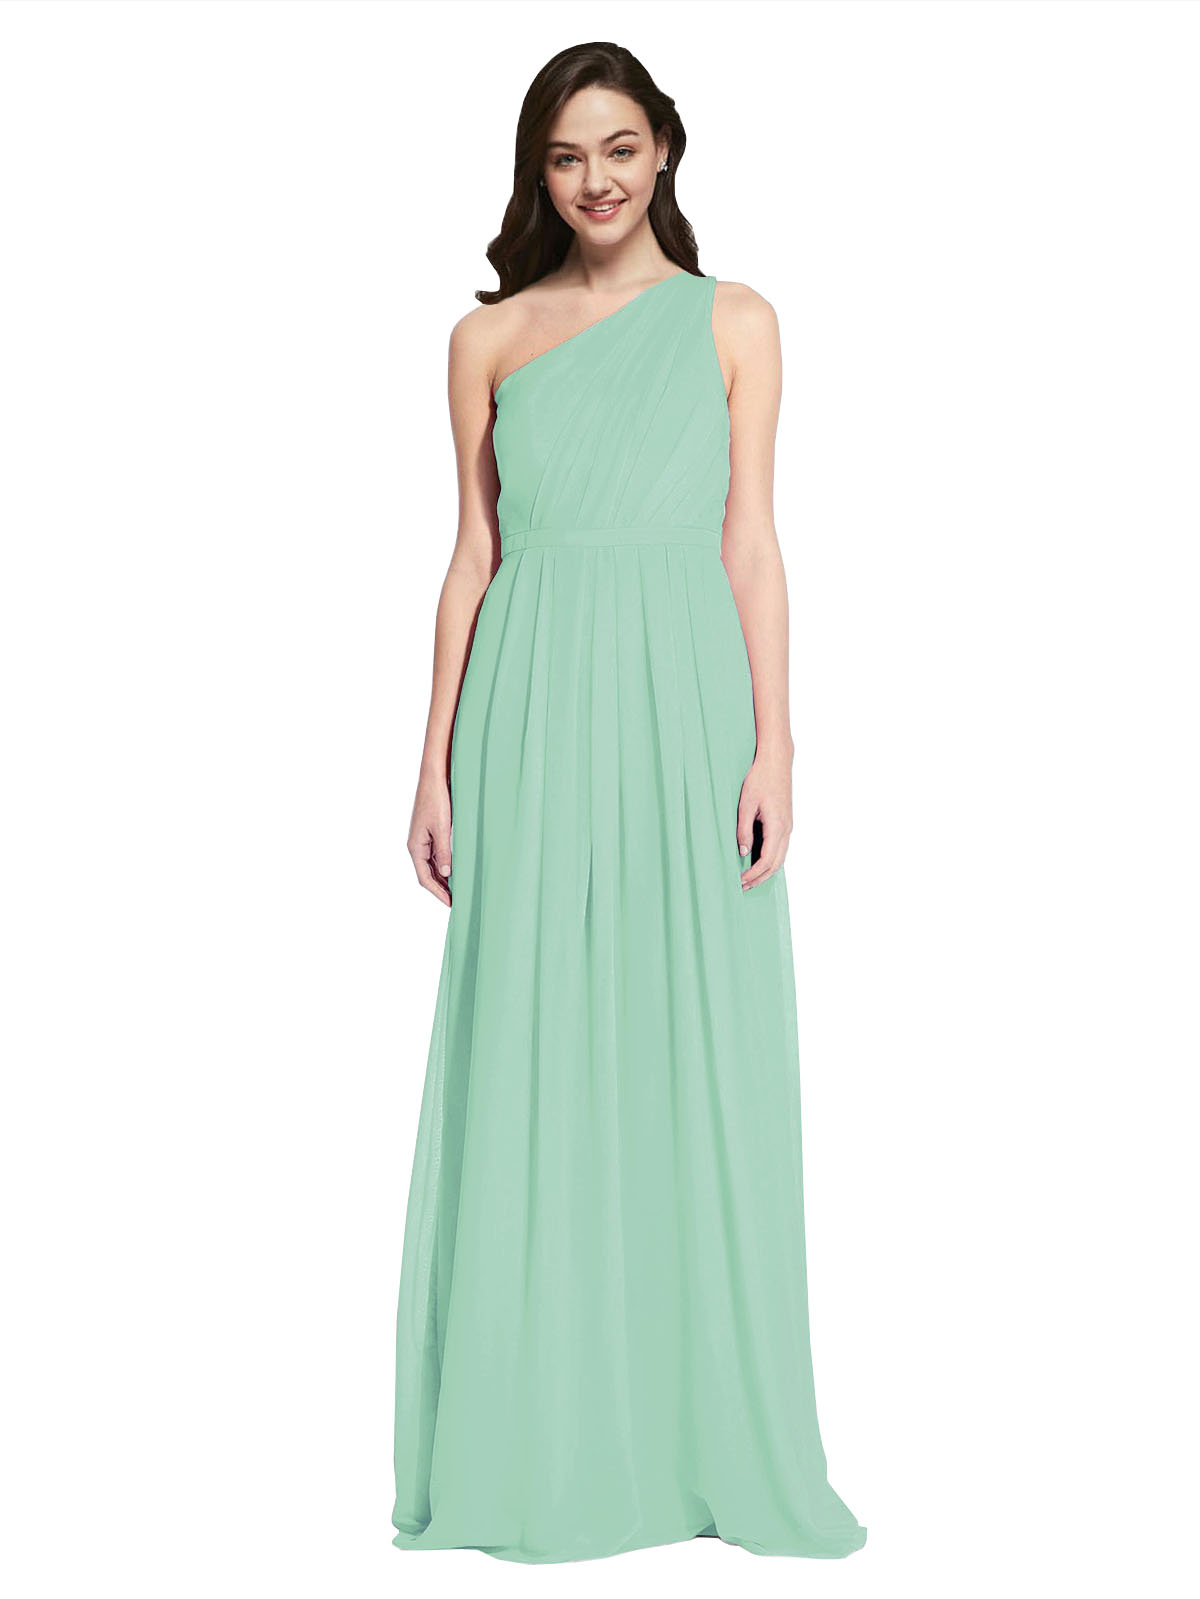 Long A-Line One Shoulder Sleeveless Mint Green Chiffon Bridesmaid Dress Orlando